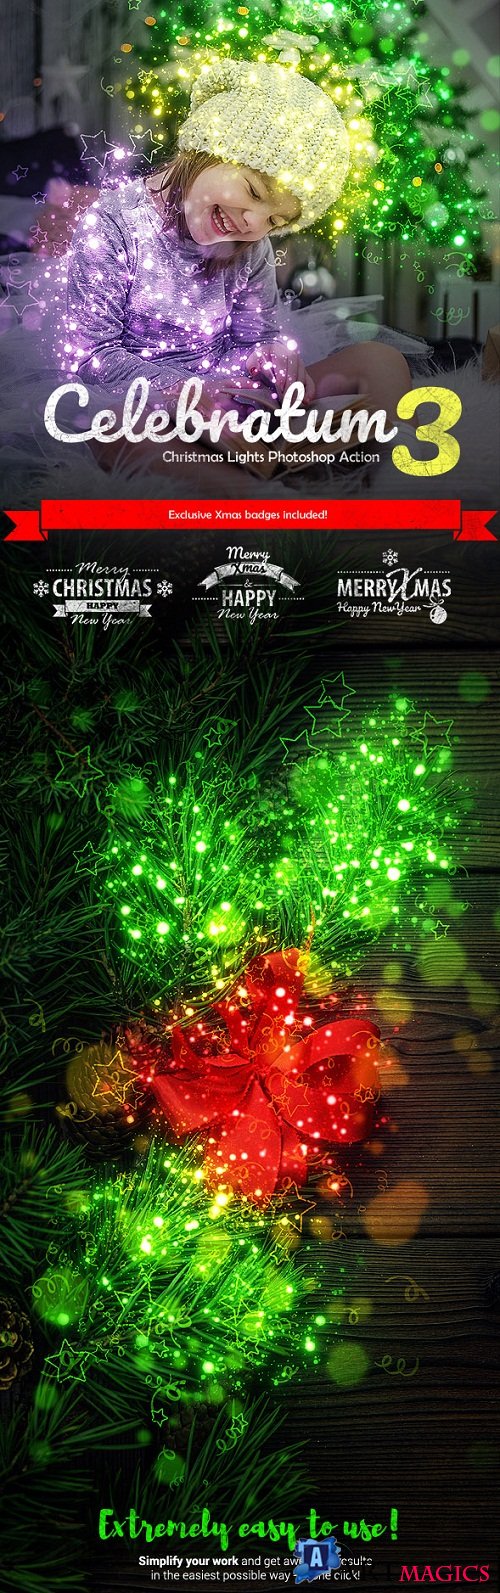 Celebratum 3 - Christmas Lights Photoshop Action 22863016